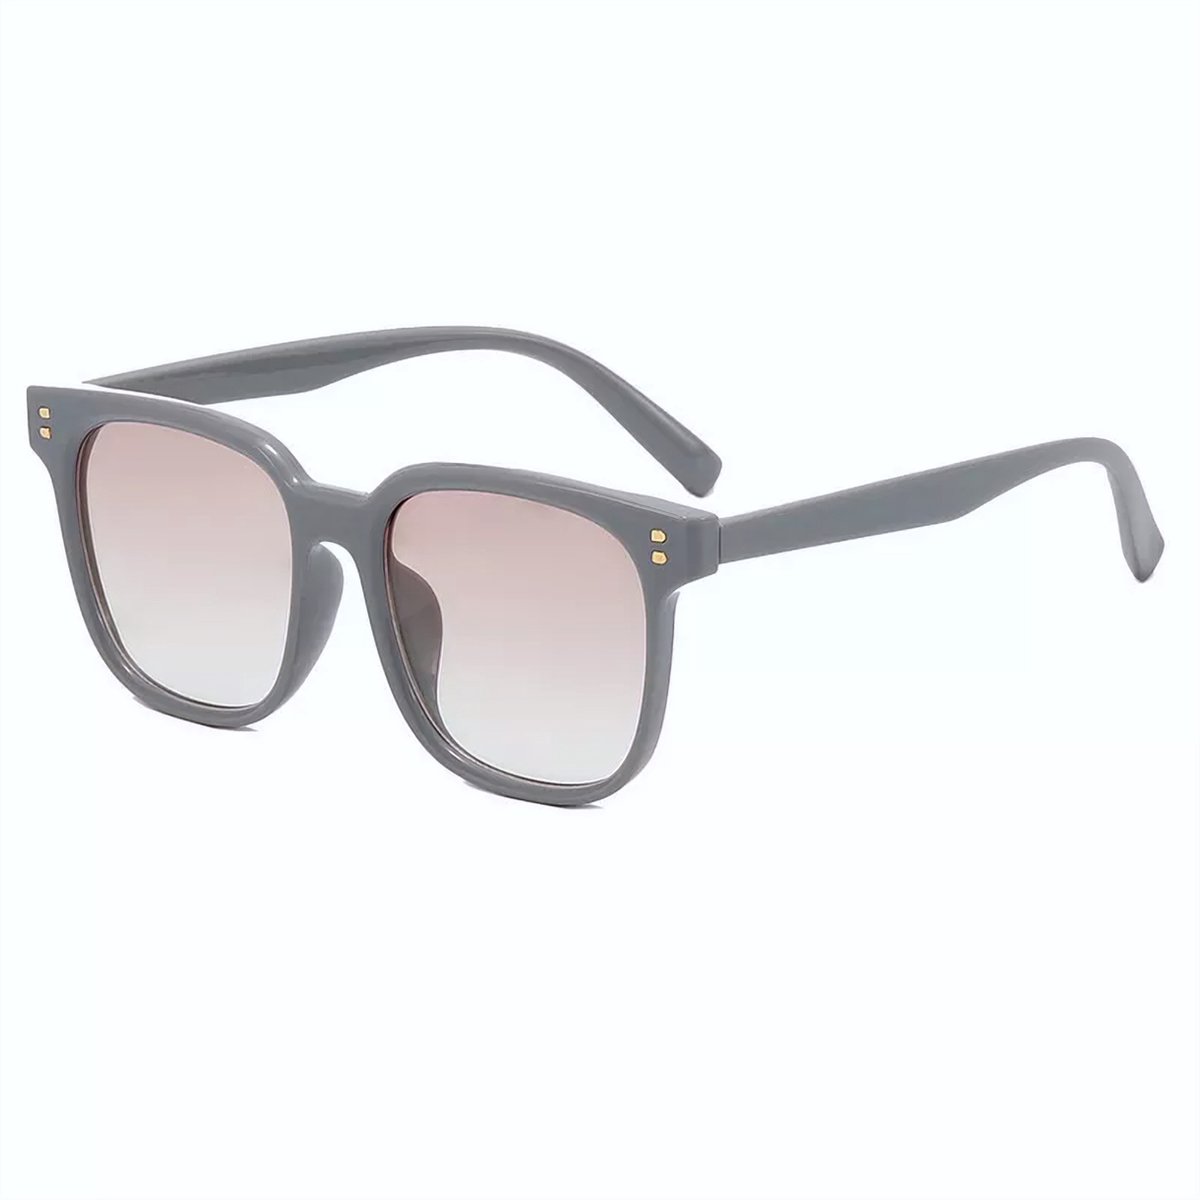 DAEBAK Grijze vierkante vintage vrouwen zonnebrillen - Grote zonnebril in vierkant vorm [Grey / Grijs] Festival Sunglasses